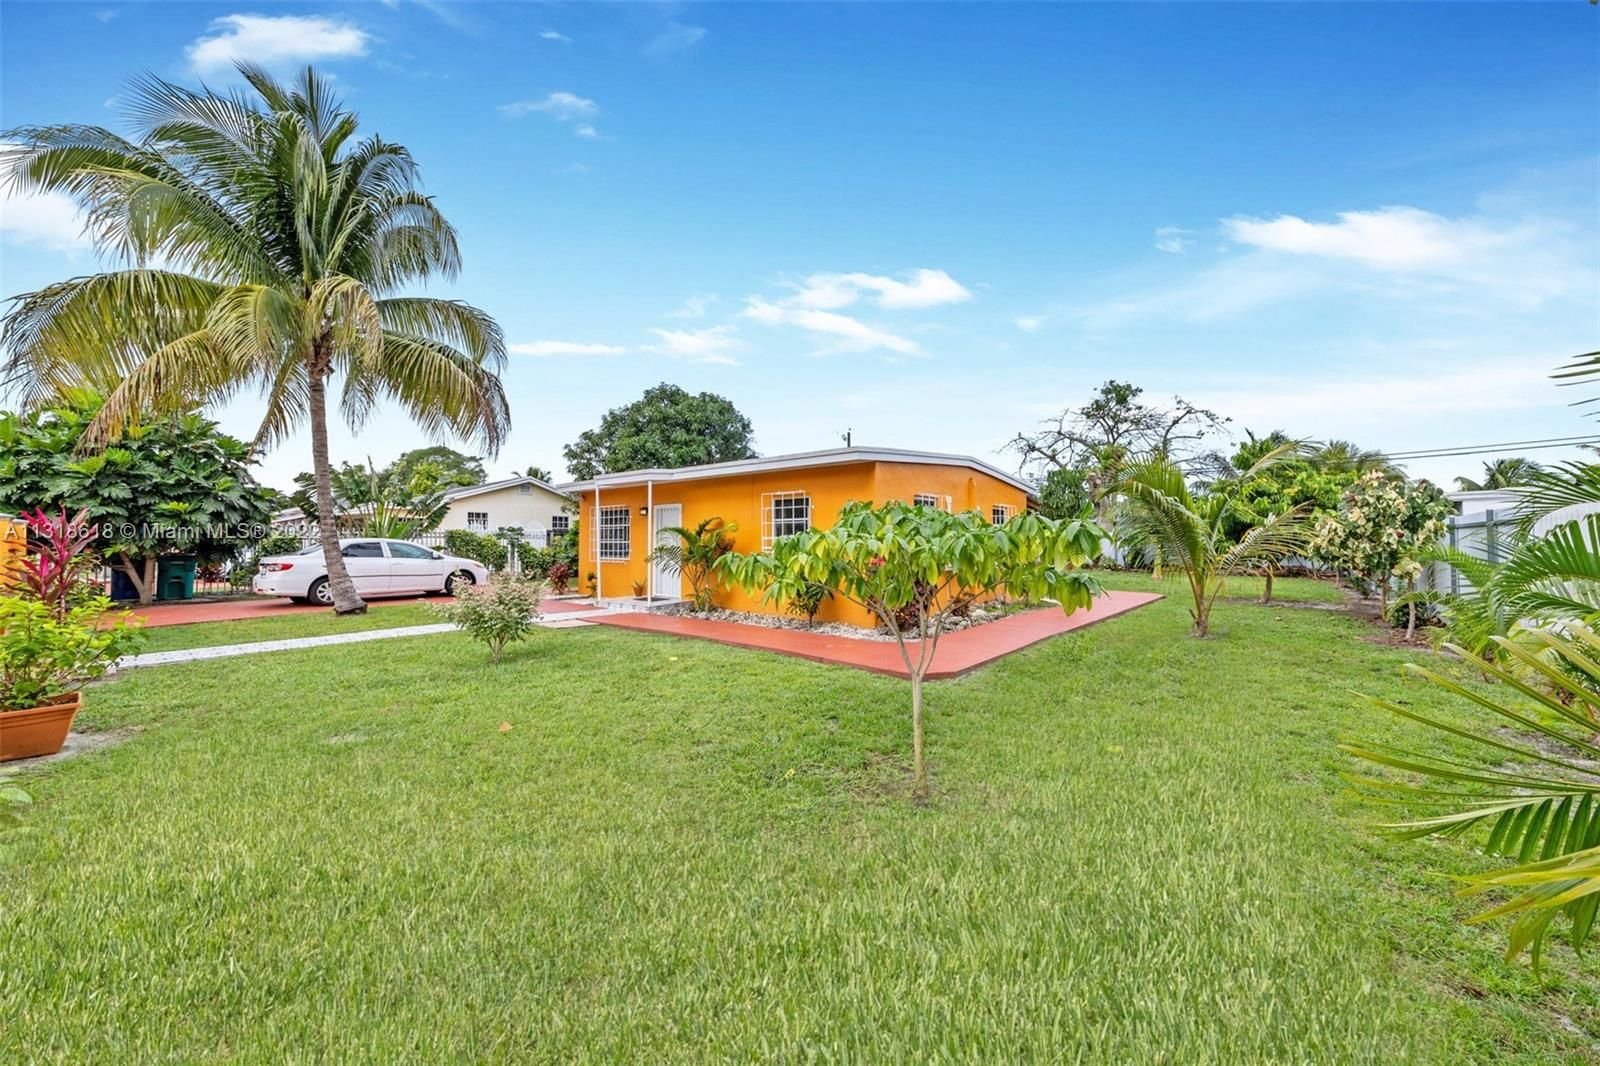 Real estate property located at 1011 140th St, Miami-Dade County, Miami, FL